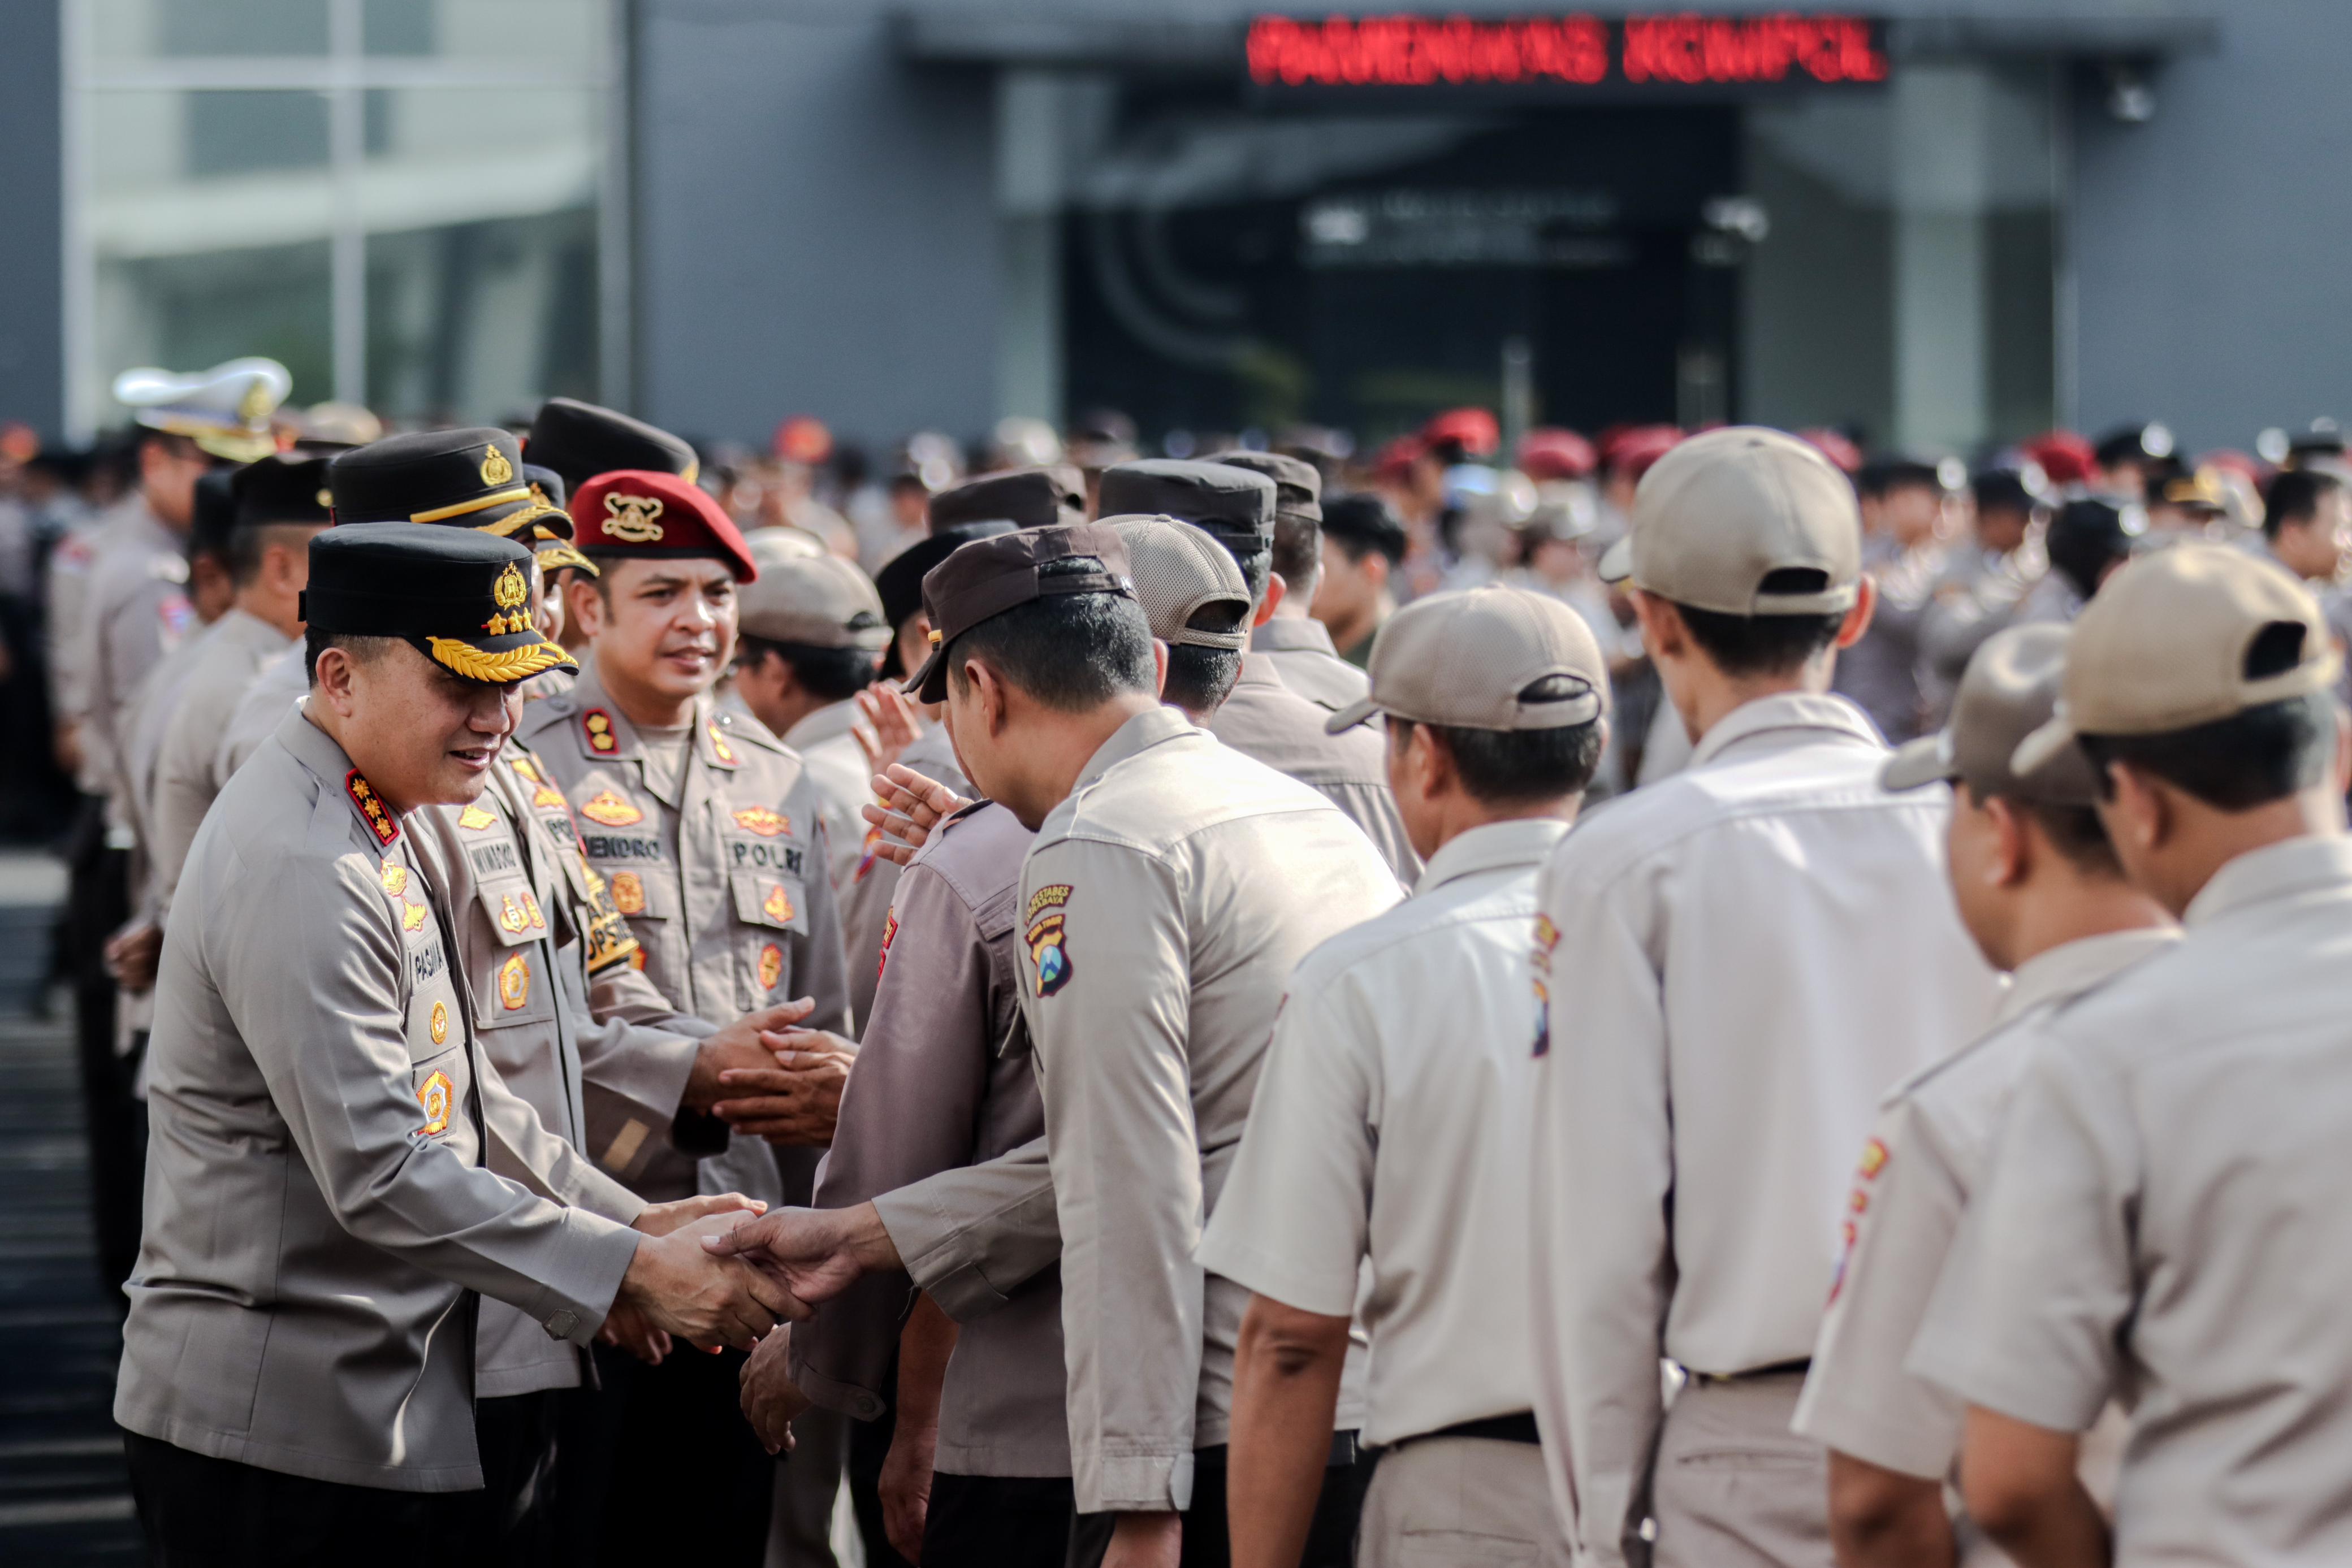 Kapolrestabes Surabaya Gelar Halalbihalal Bersama Anggota di Mapolrestabes